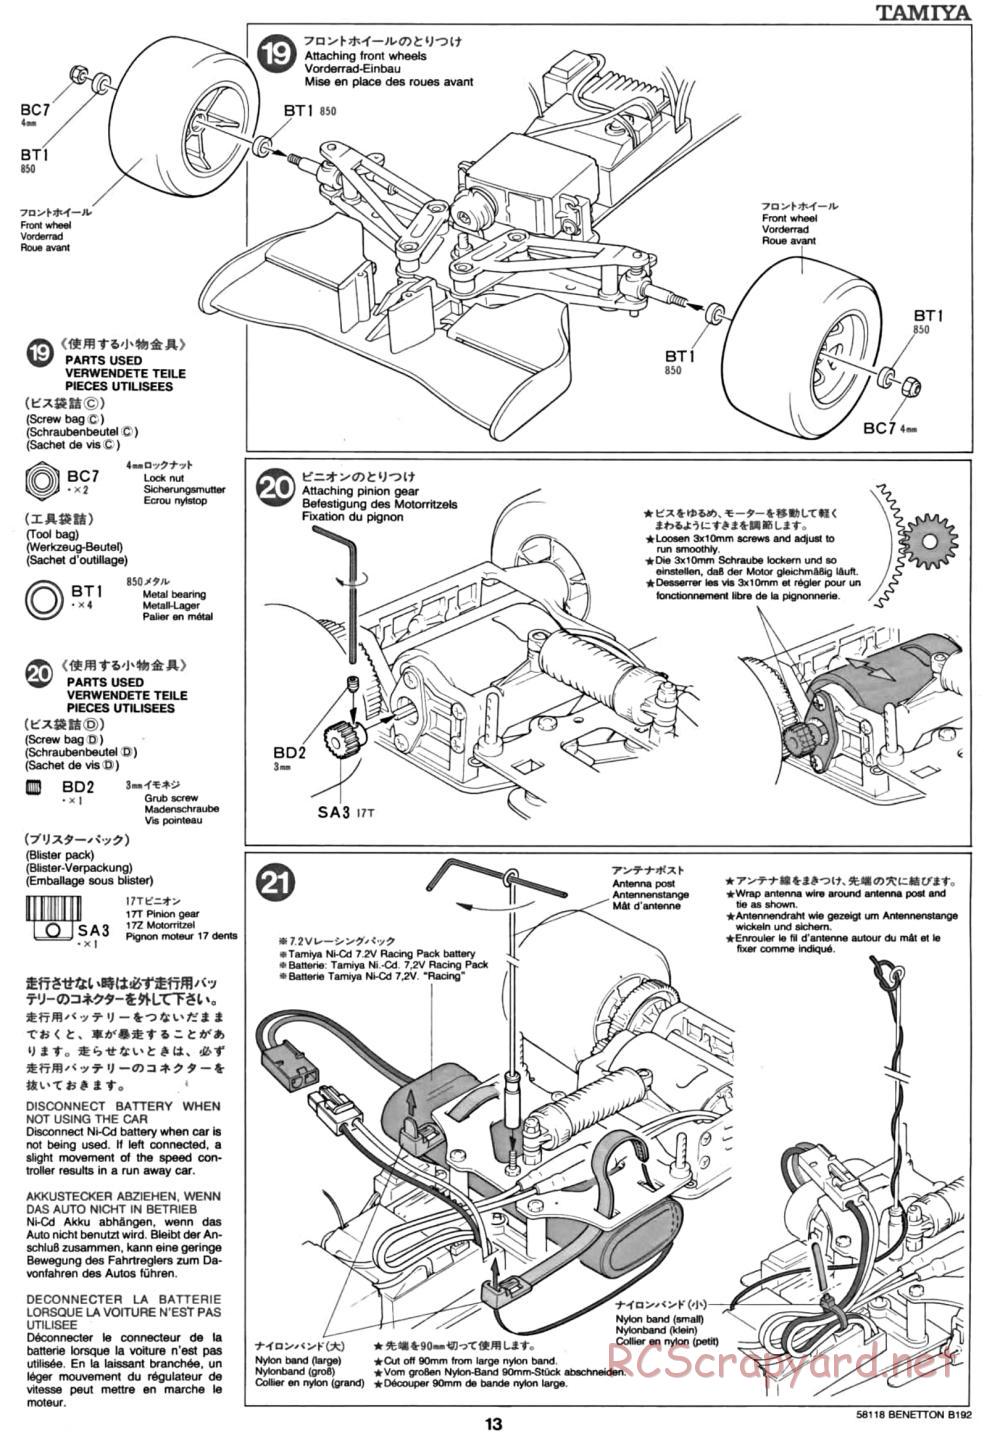 Tamiya - Benetton B192 - F102 Chassis - Manual - Page 13